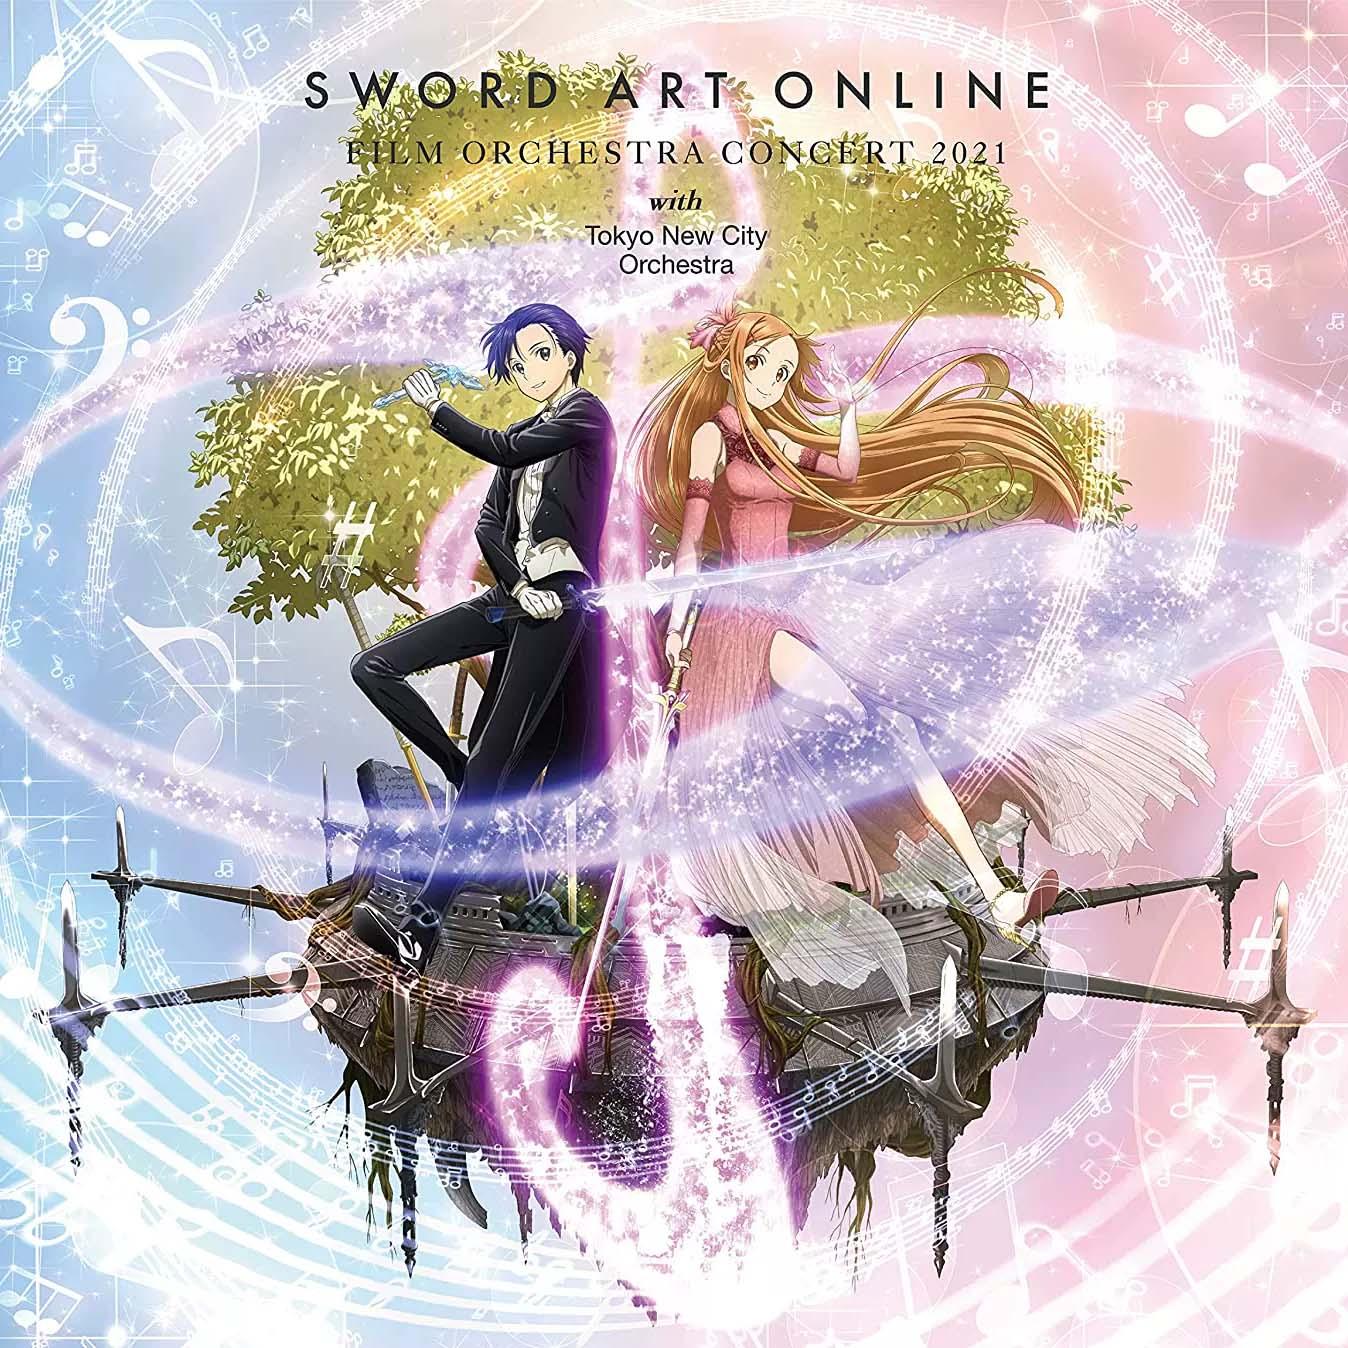 Sword Art Online Film Orchestra Concert 2021